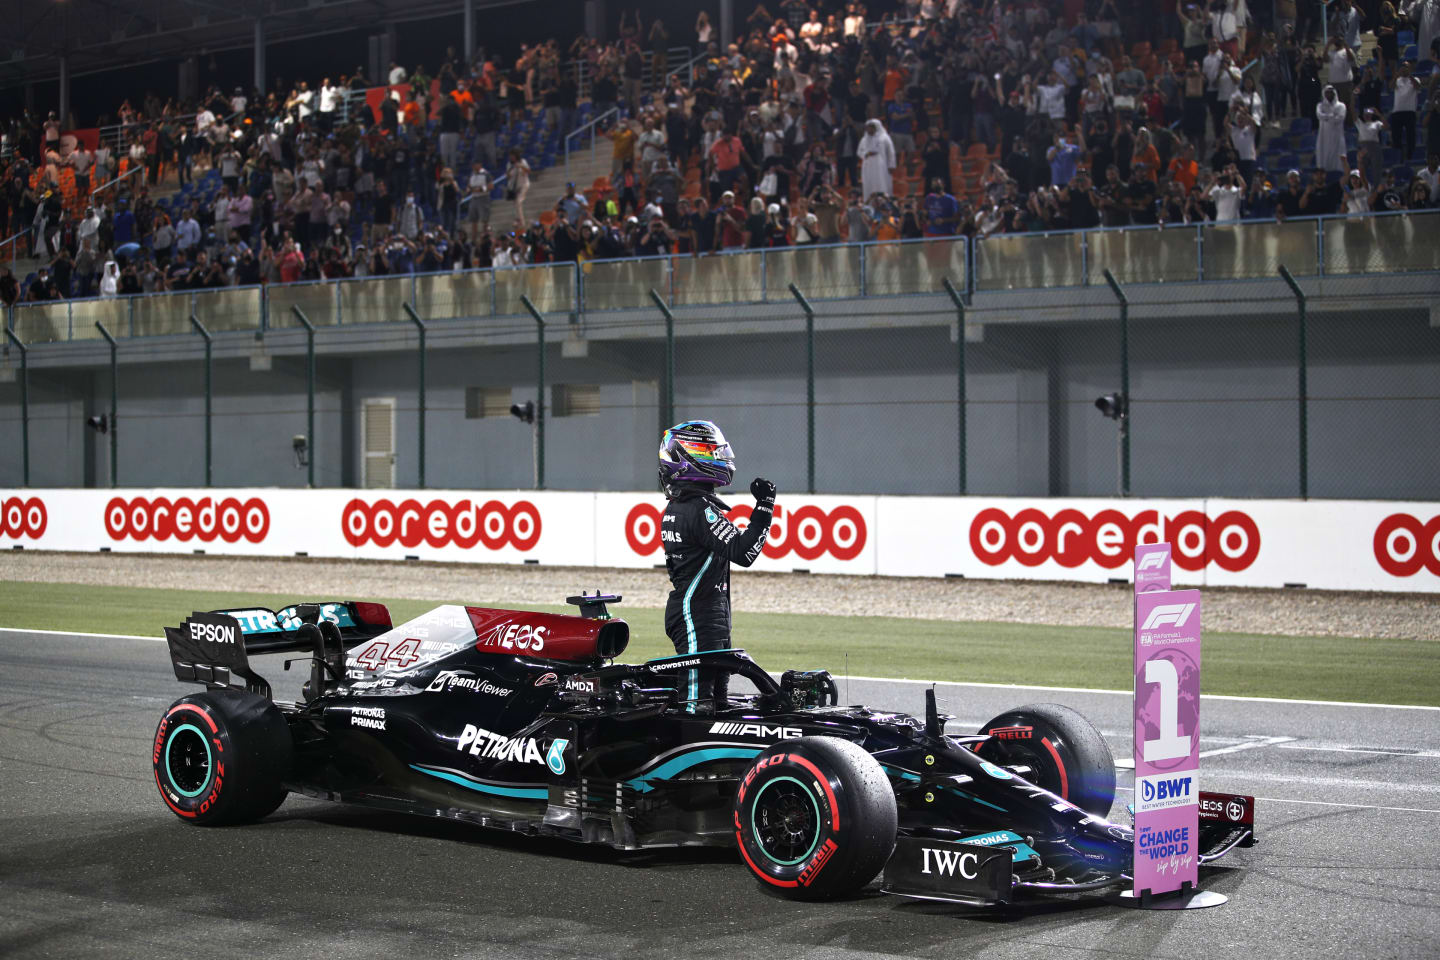 DOHA, QATAR - NOVEMBER 20: Pole position qualifier Lewis Hamilton of Great Britain and Mercedes GP